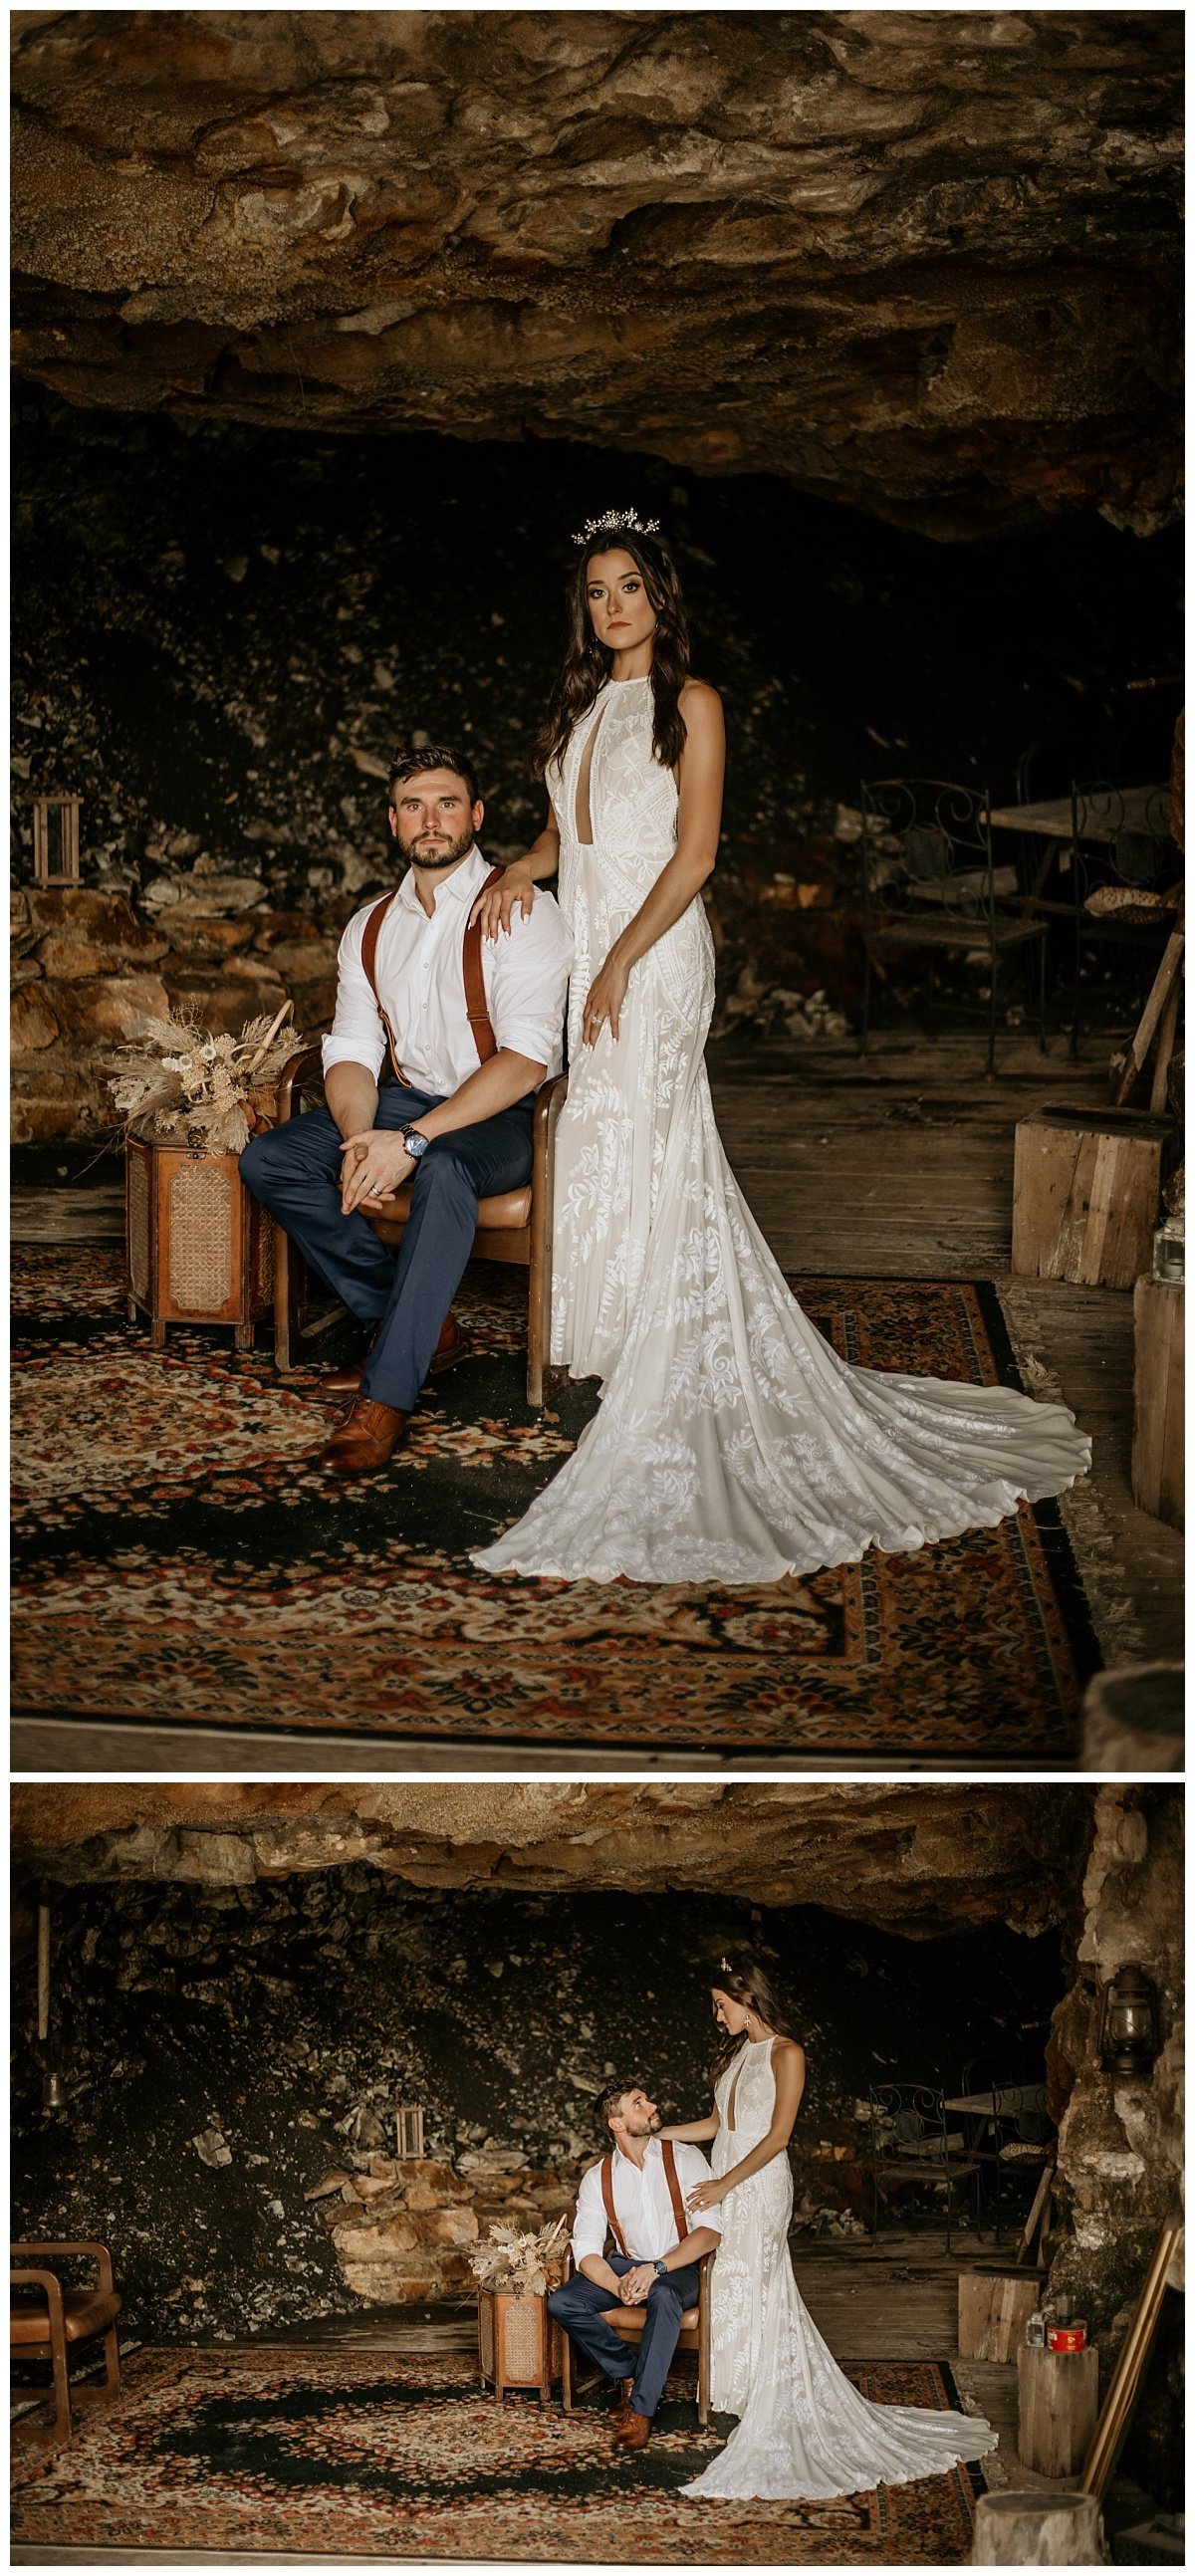 Boho+Elopement+_+Kansas+City+Wedding+Photography+_+Colorado+Elopement+_+Outdoor+Wedding+_+Outdoor+Elopement+Photos (6).jpeg